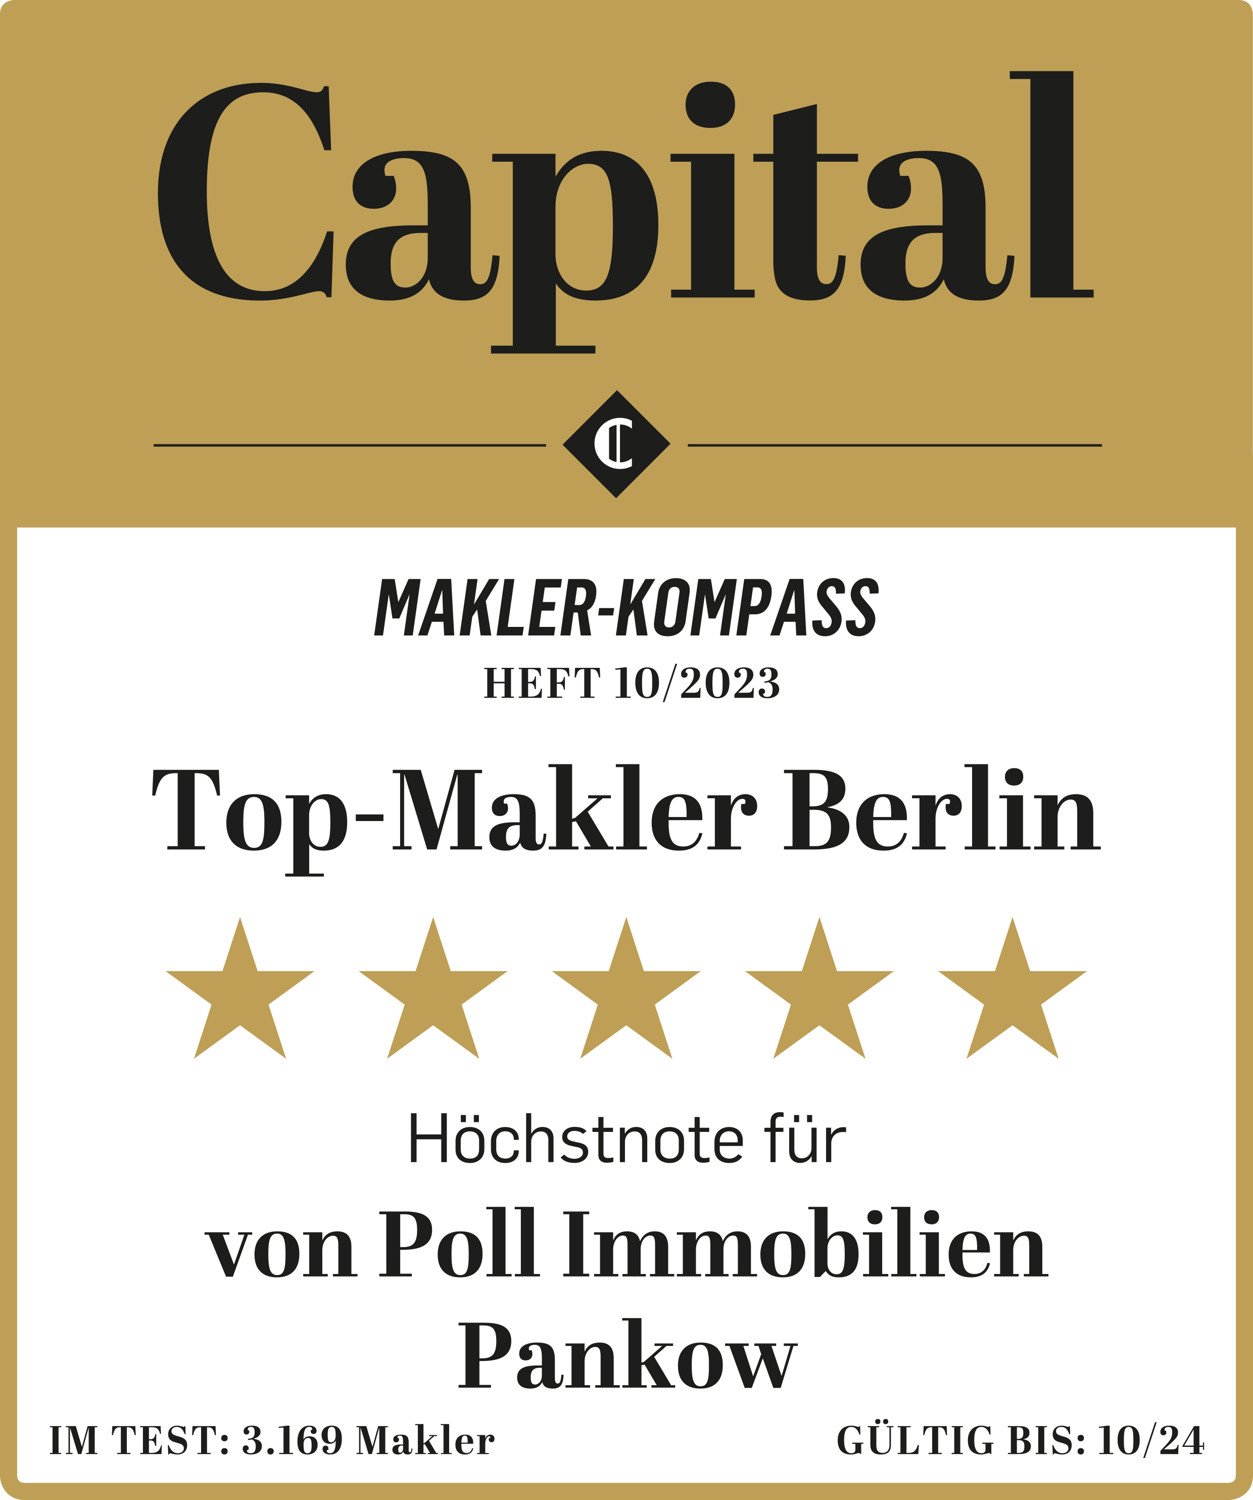 CAP_1023_Makler-Kompass_Berlin_Pankow